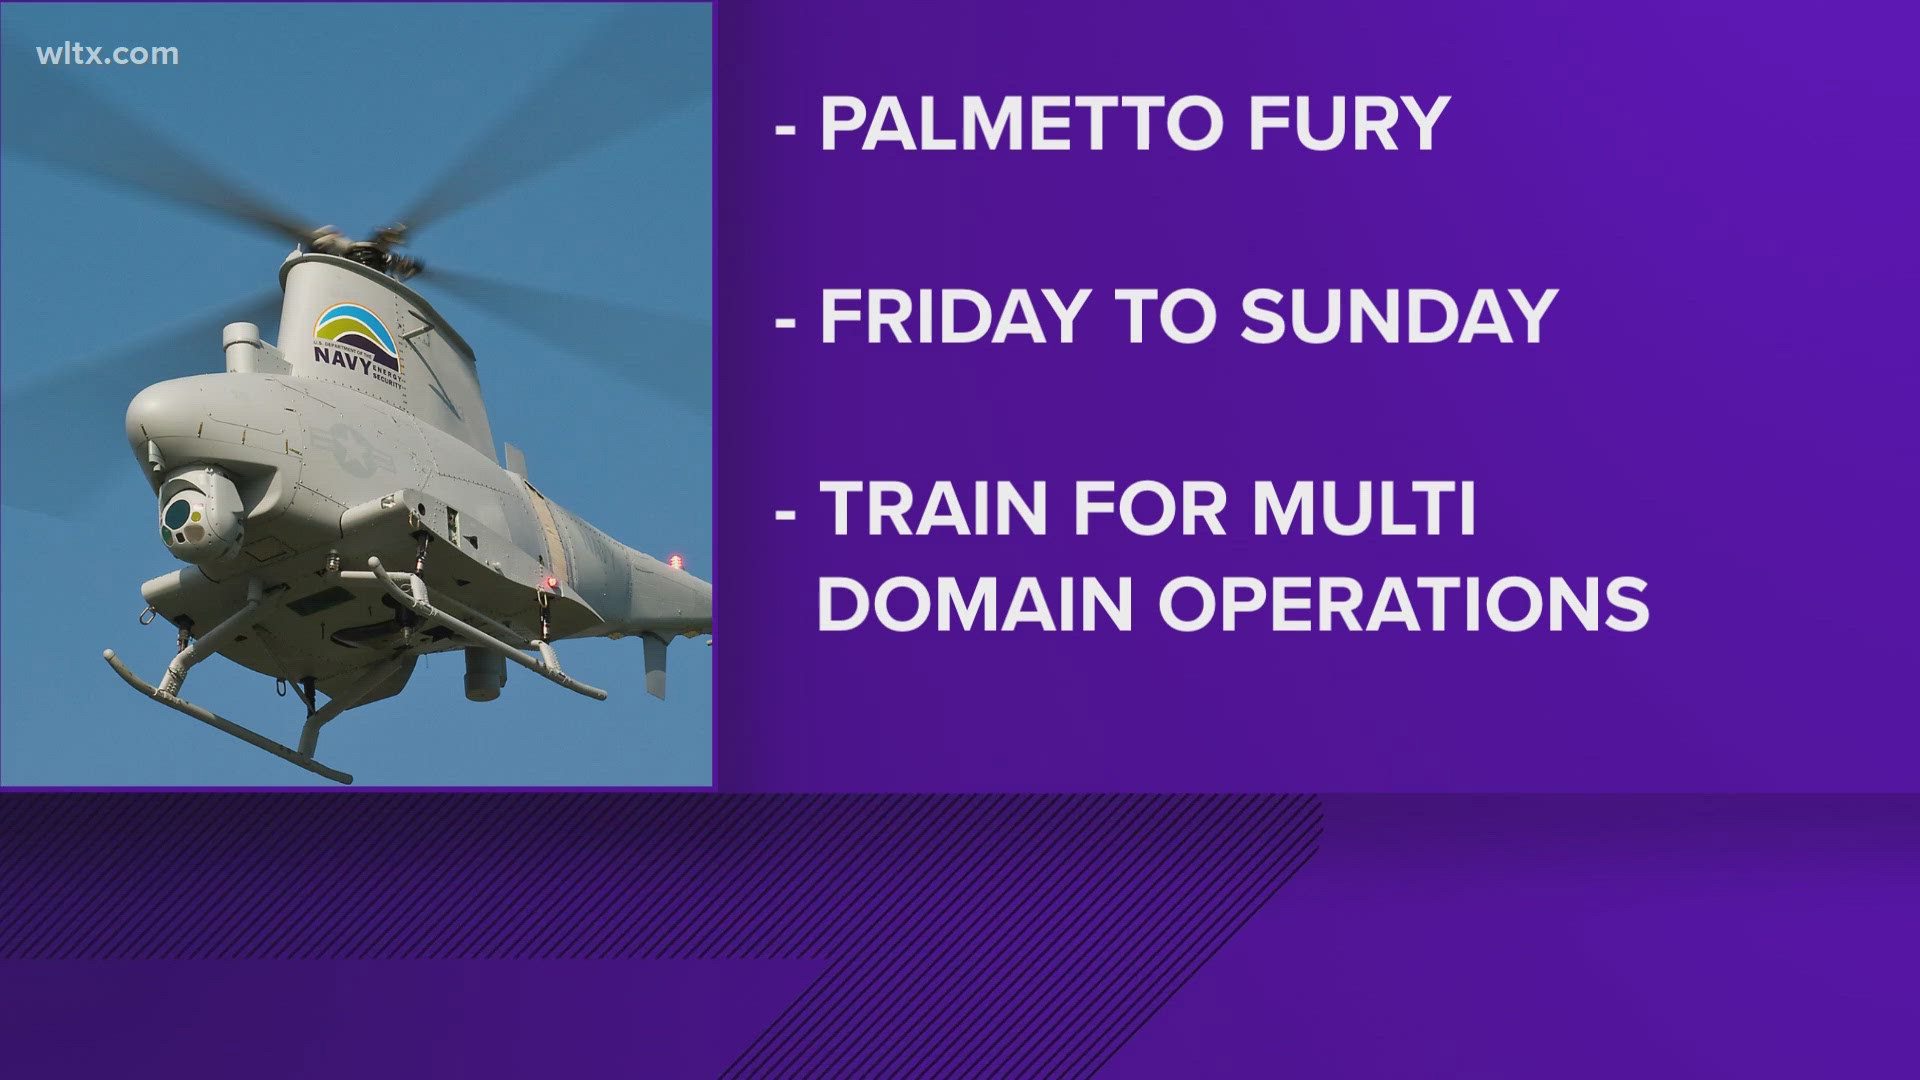 "Palmetto Fury" will go from Friday to Sunday.